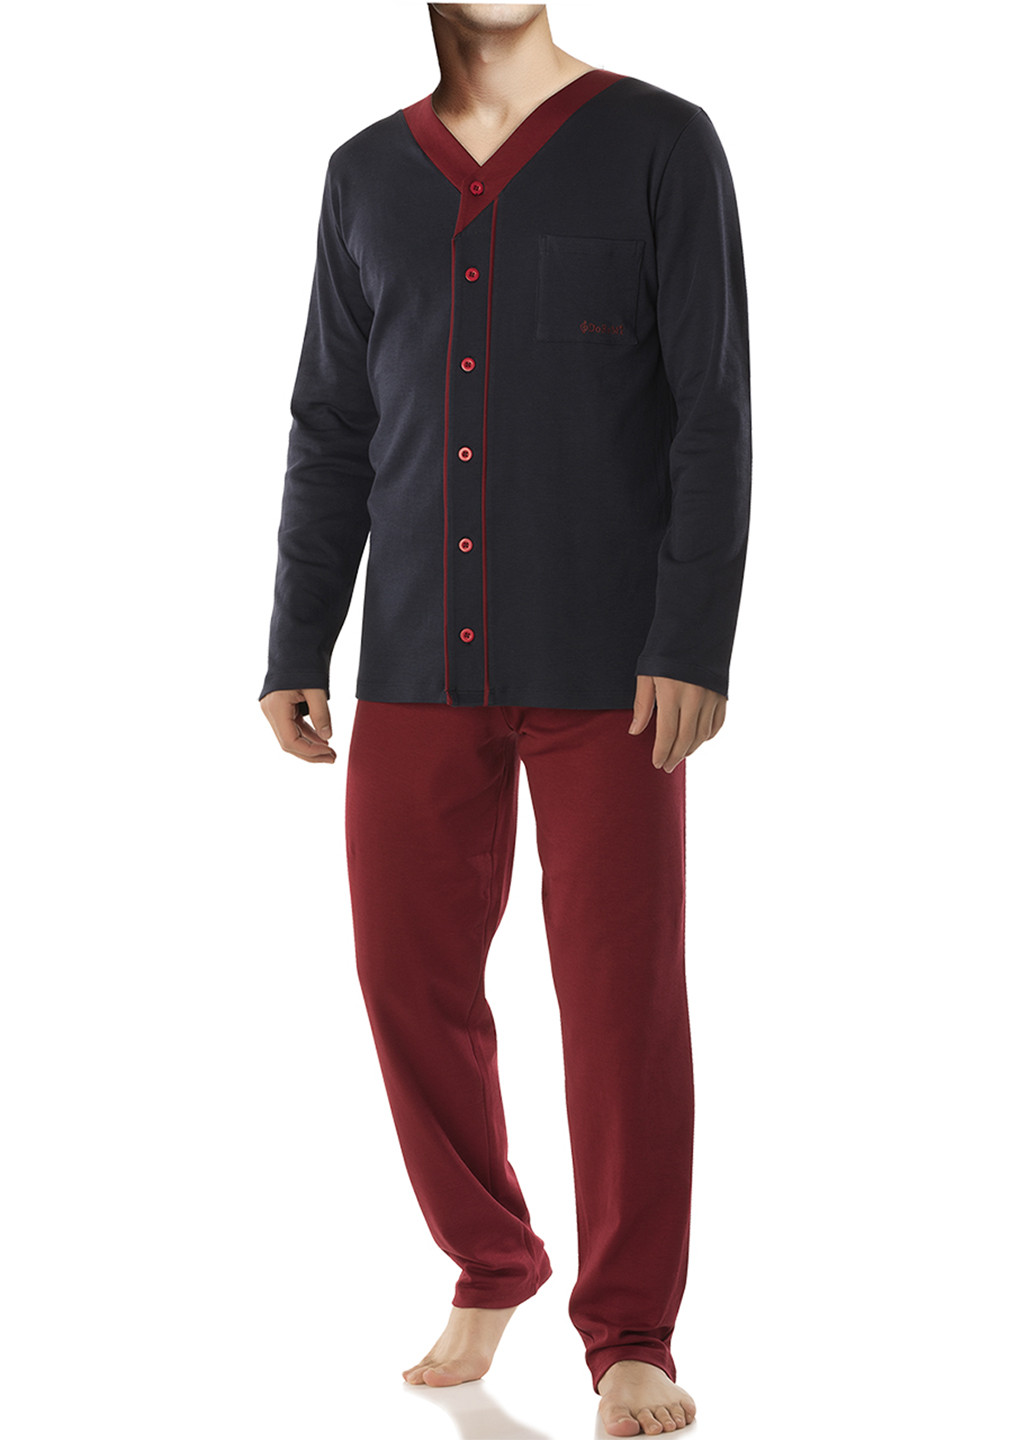 Пижама (рубашка, брюки) DoReMi рубашка + брюки однотонная комбинированная домашняя хлопок